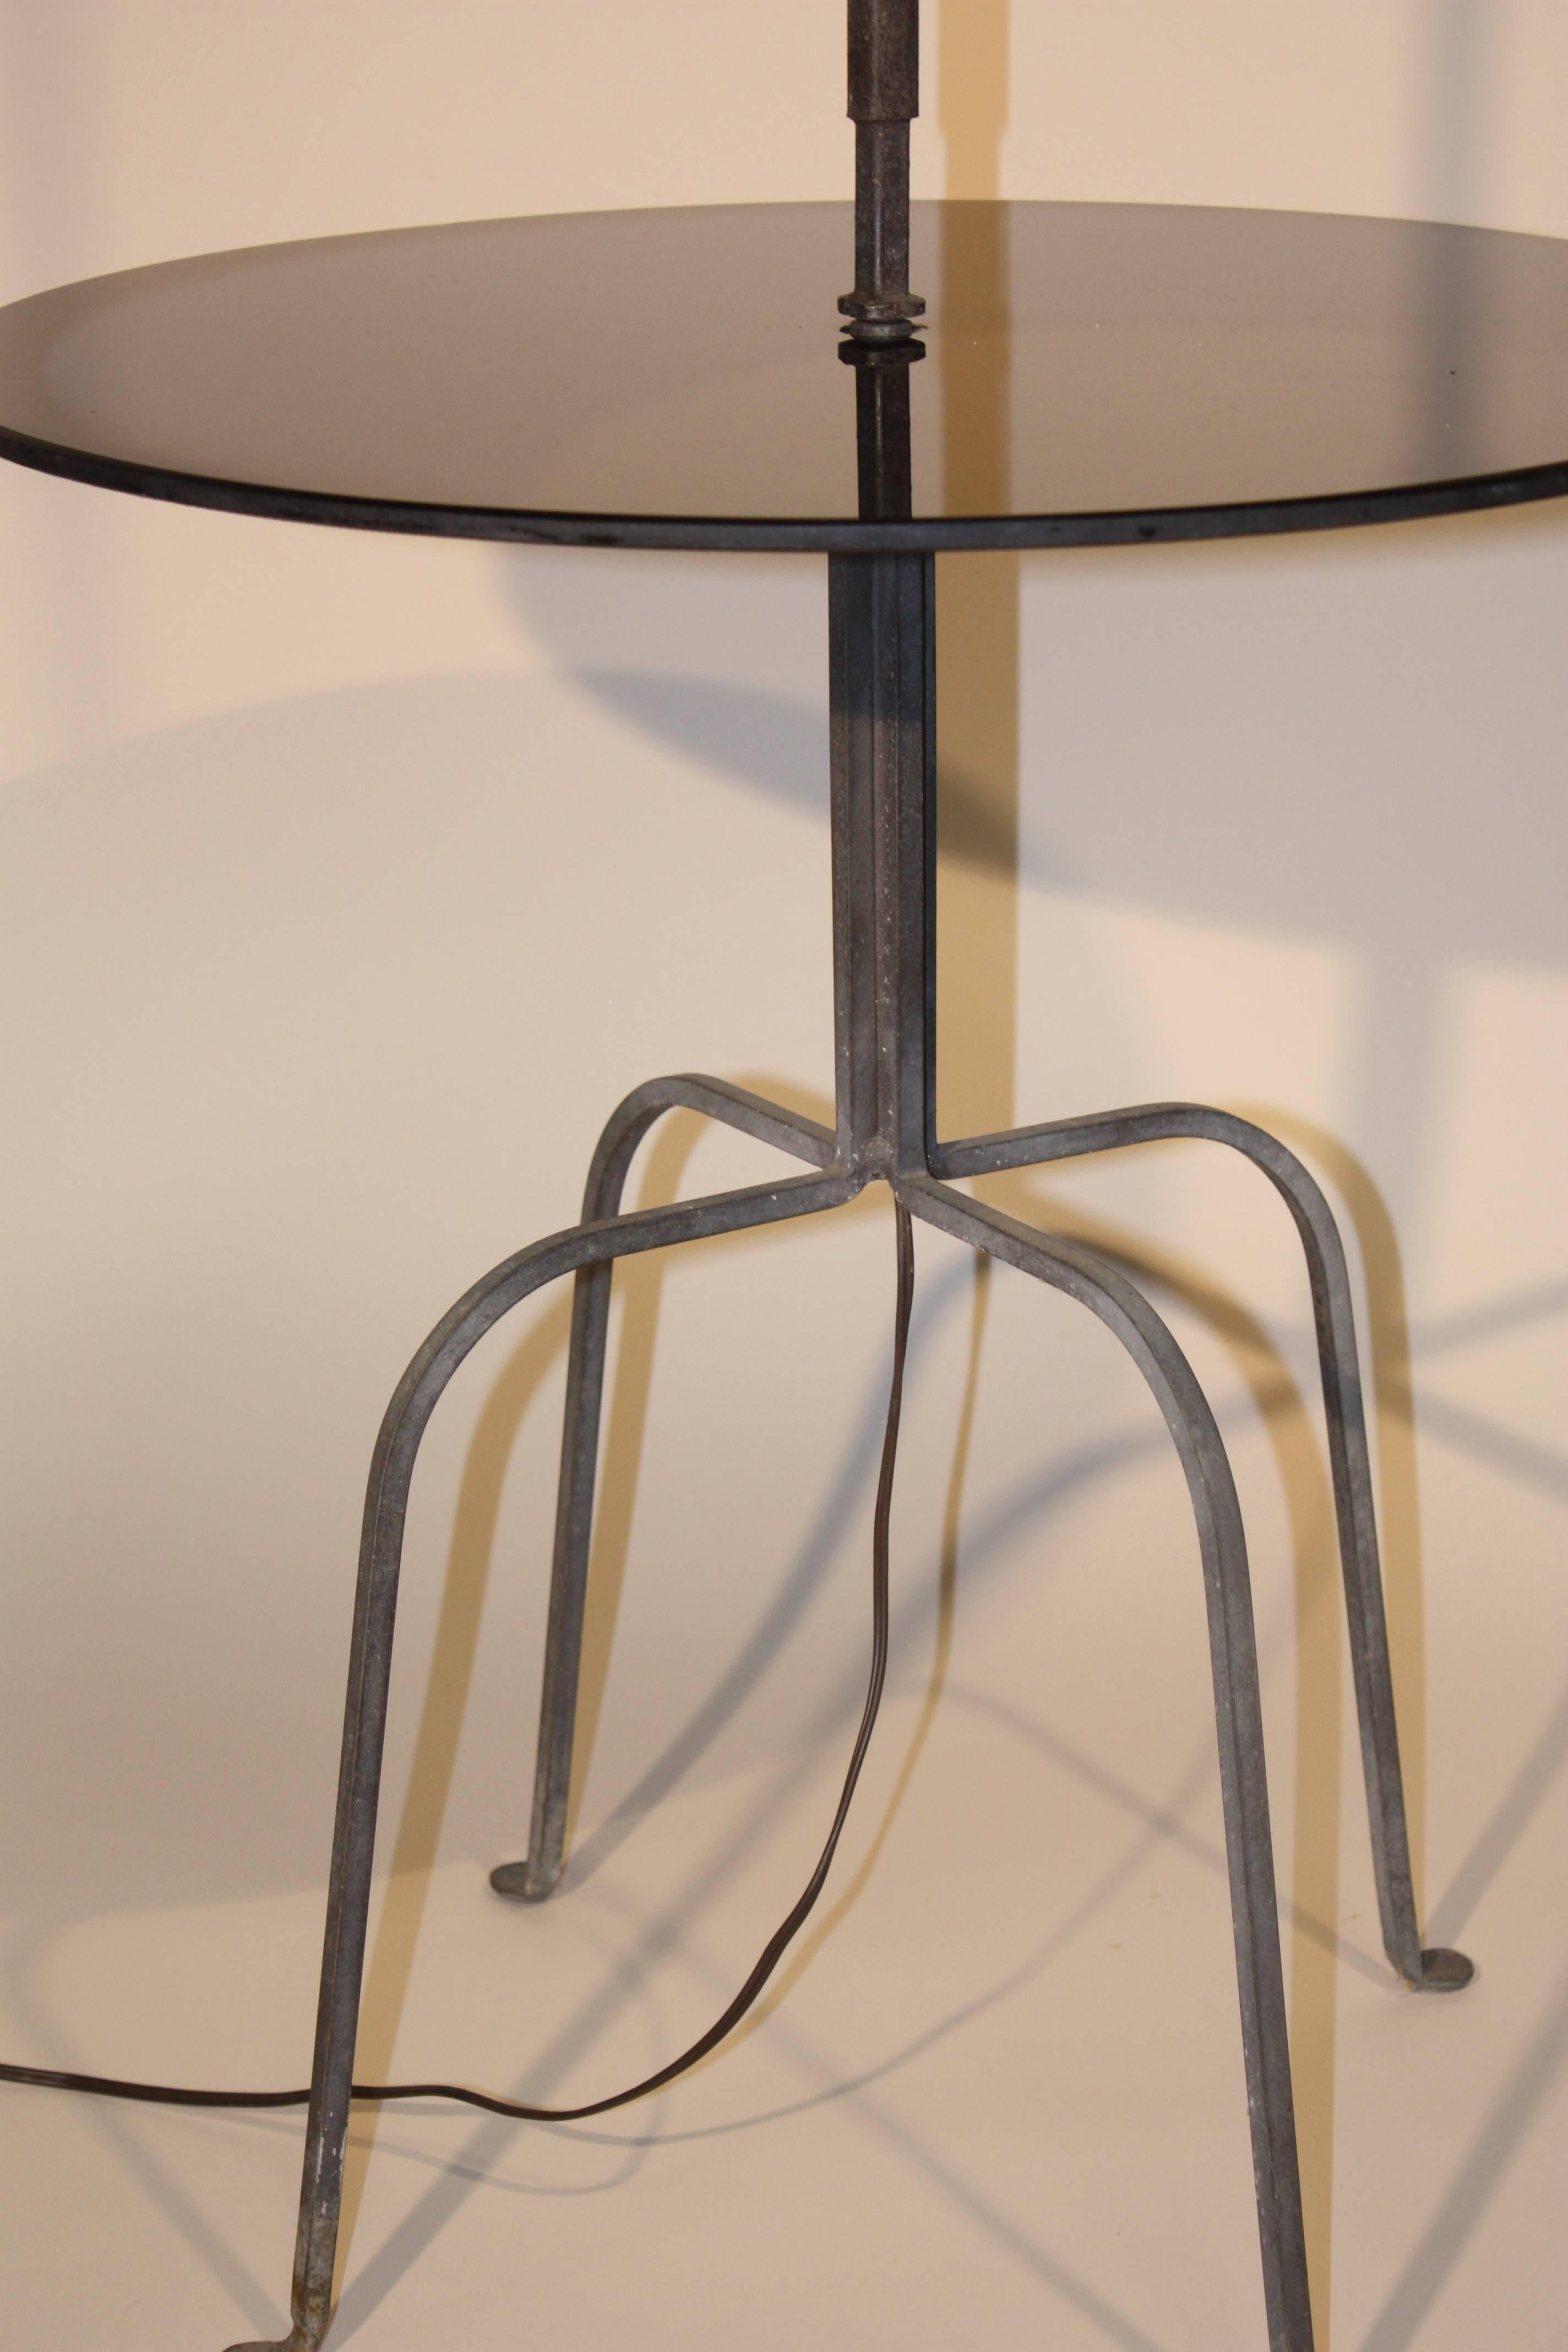 20th Century Modernist Lamp Table